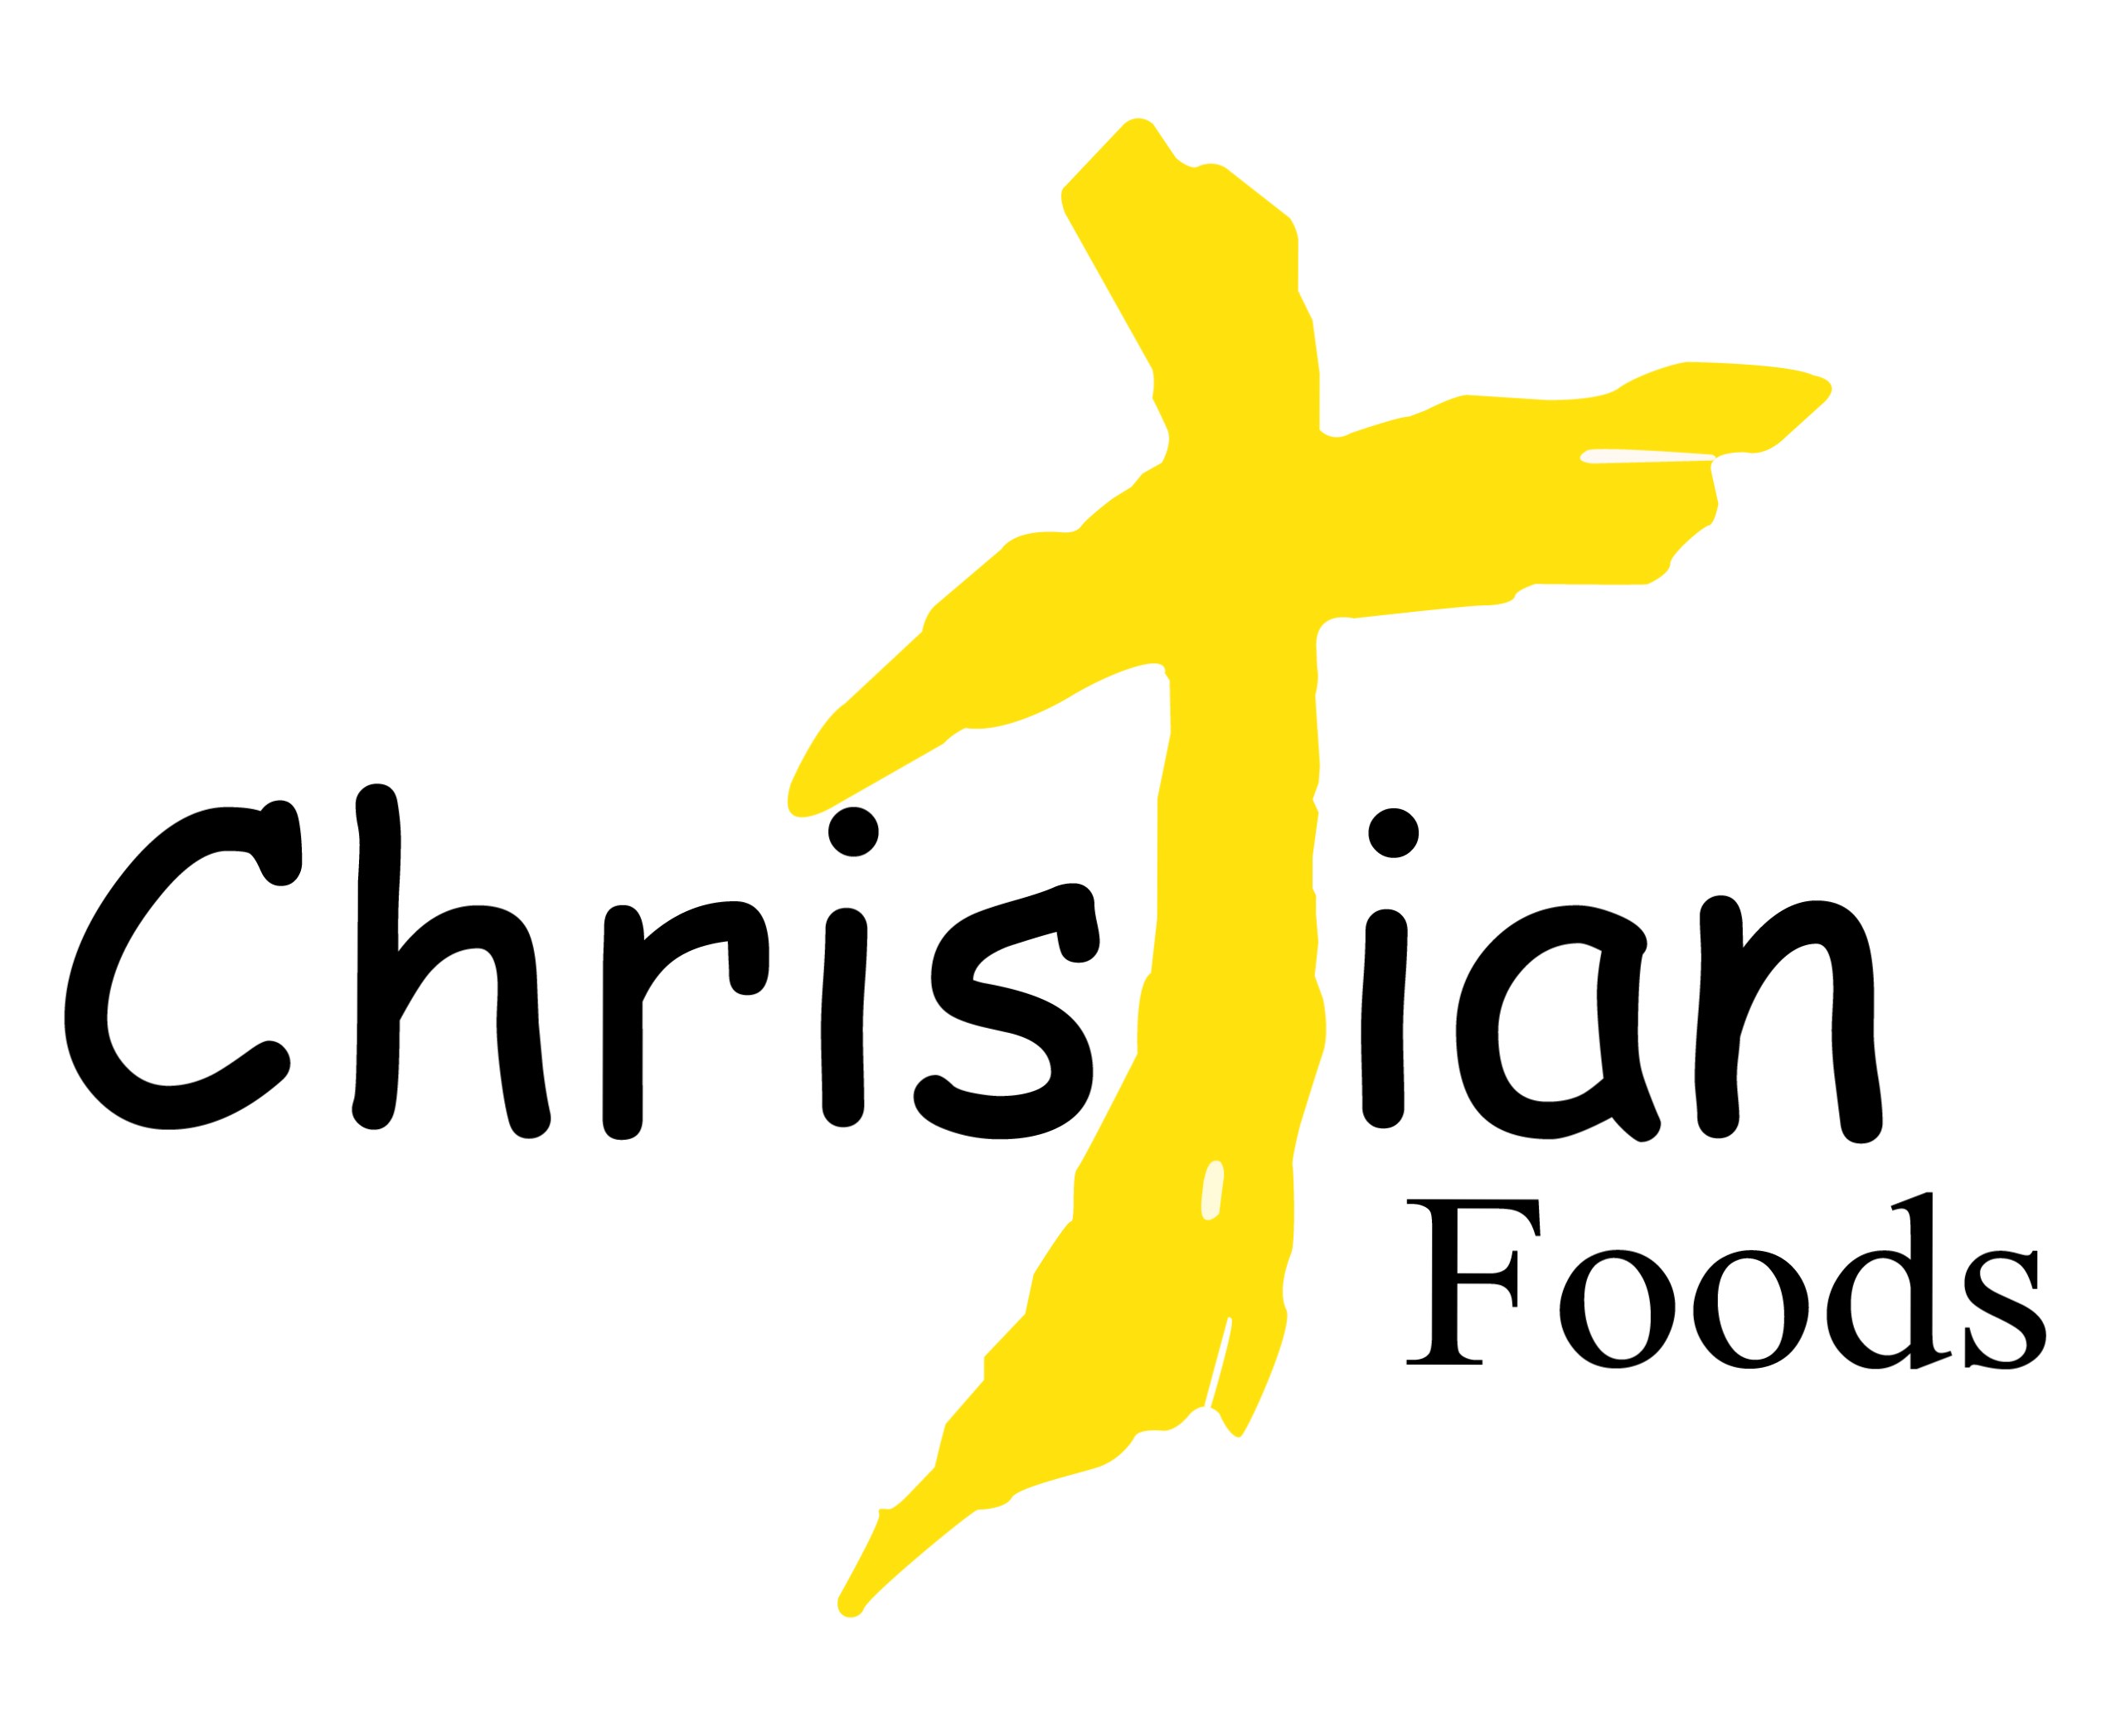 Christian Foods